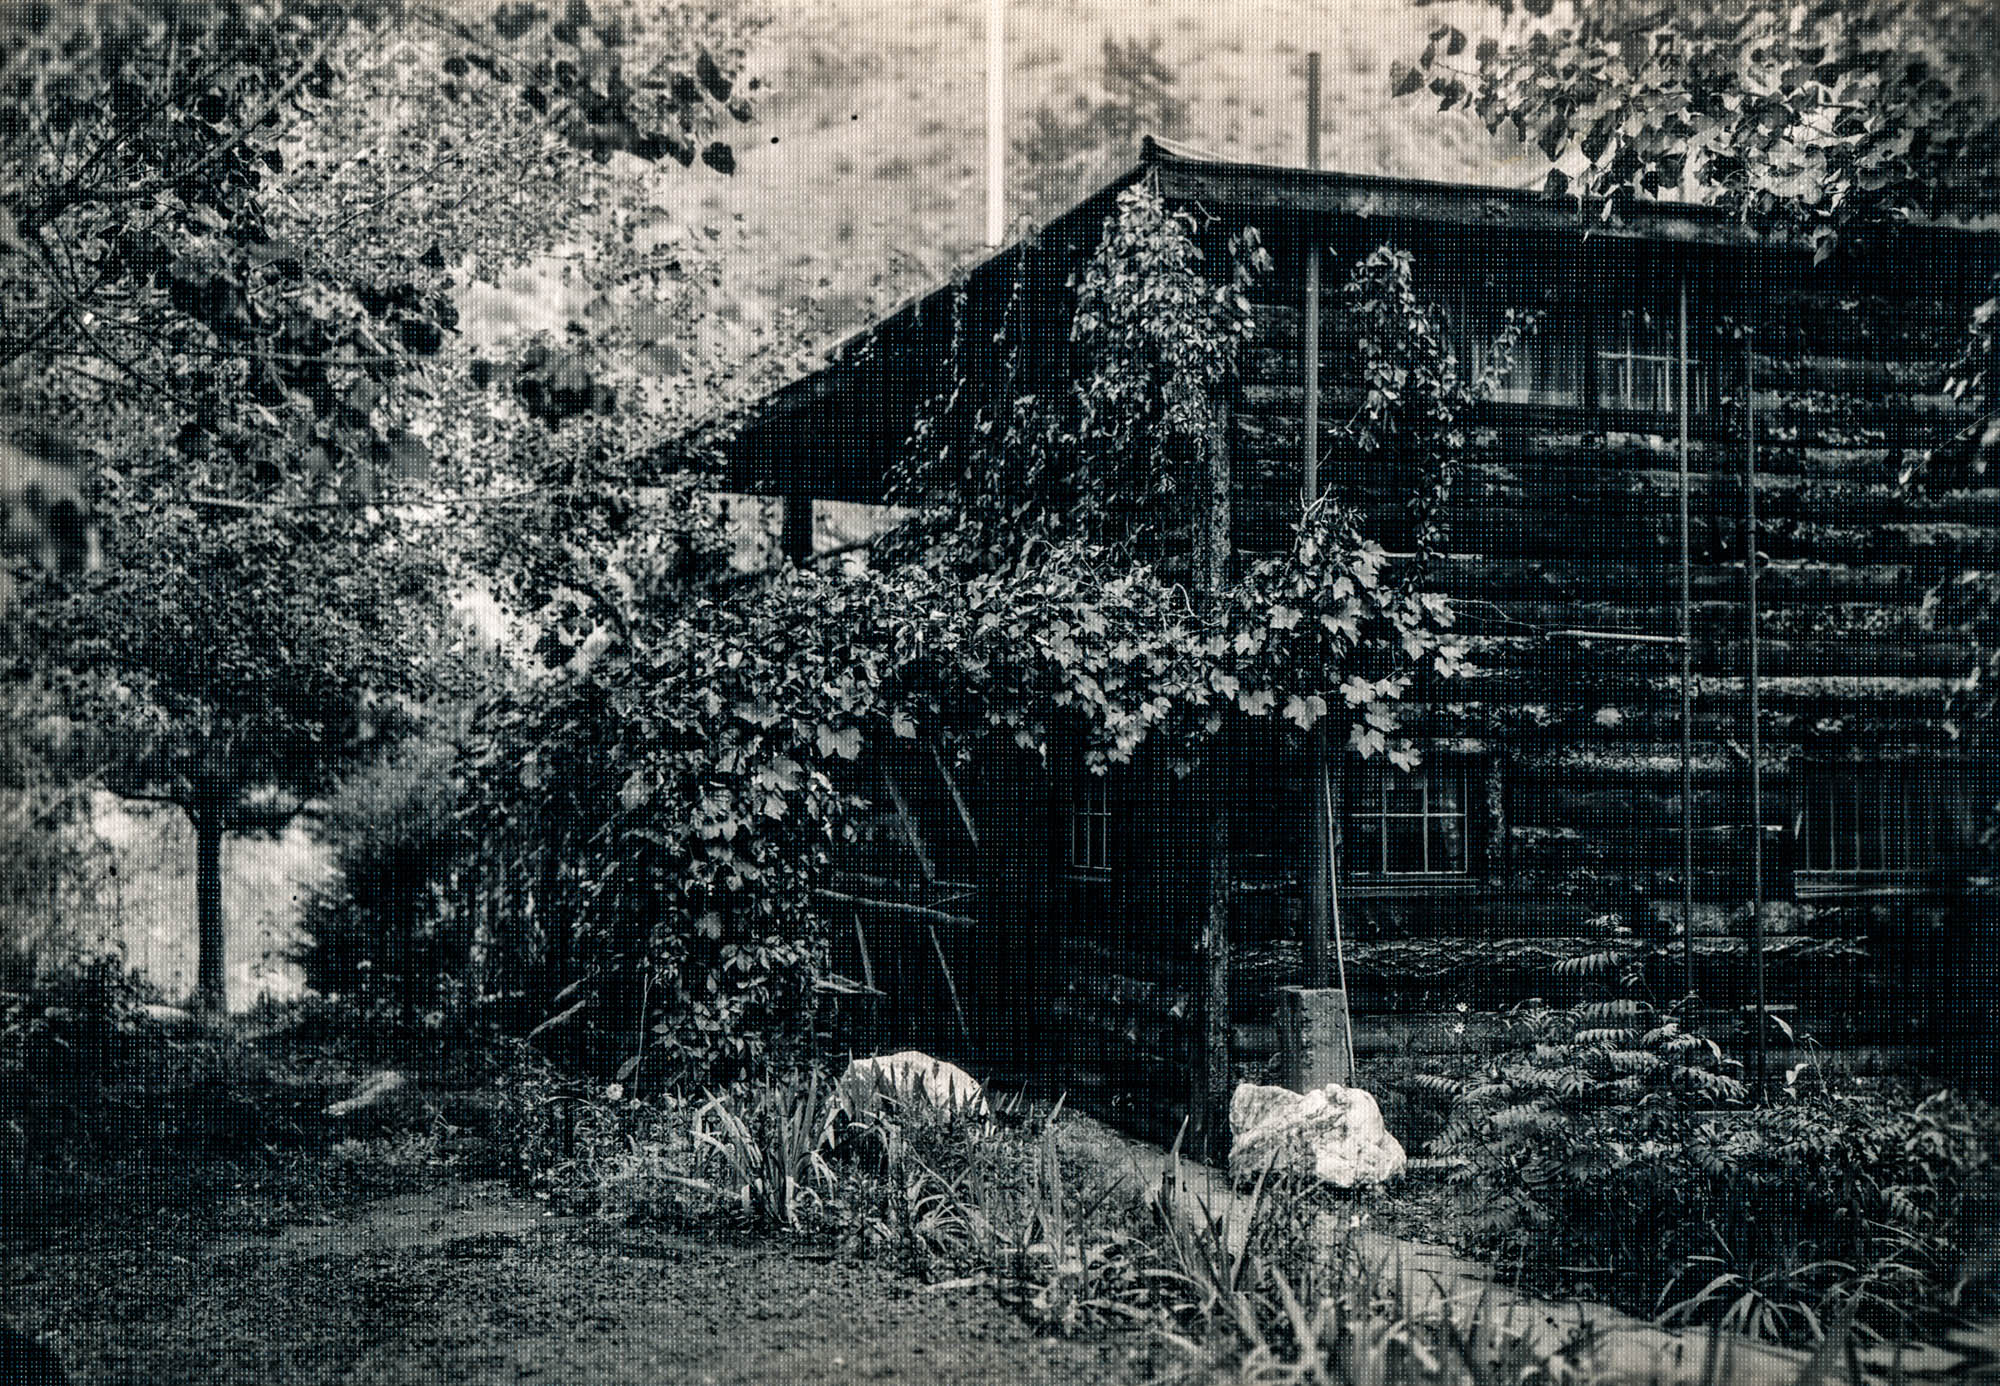 Idlewild Lodge - idlewildlodge.github.io - Circa 1930s - Grape Vines Covering Idlewild Lodge